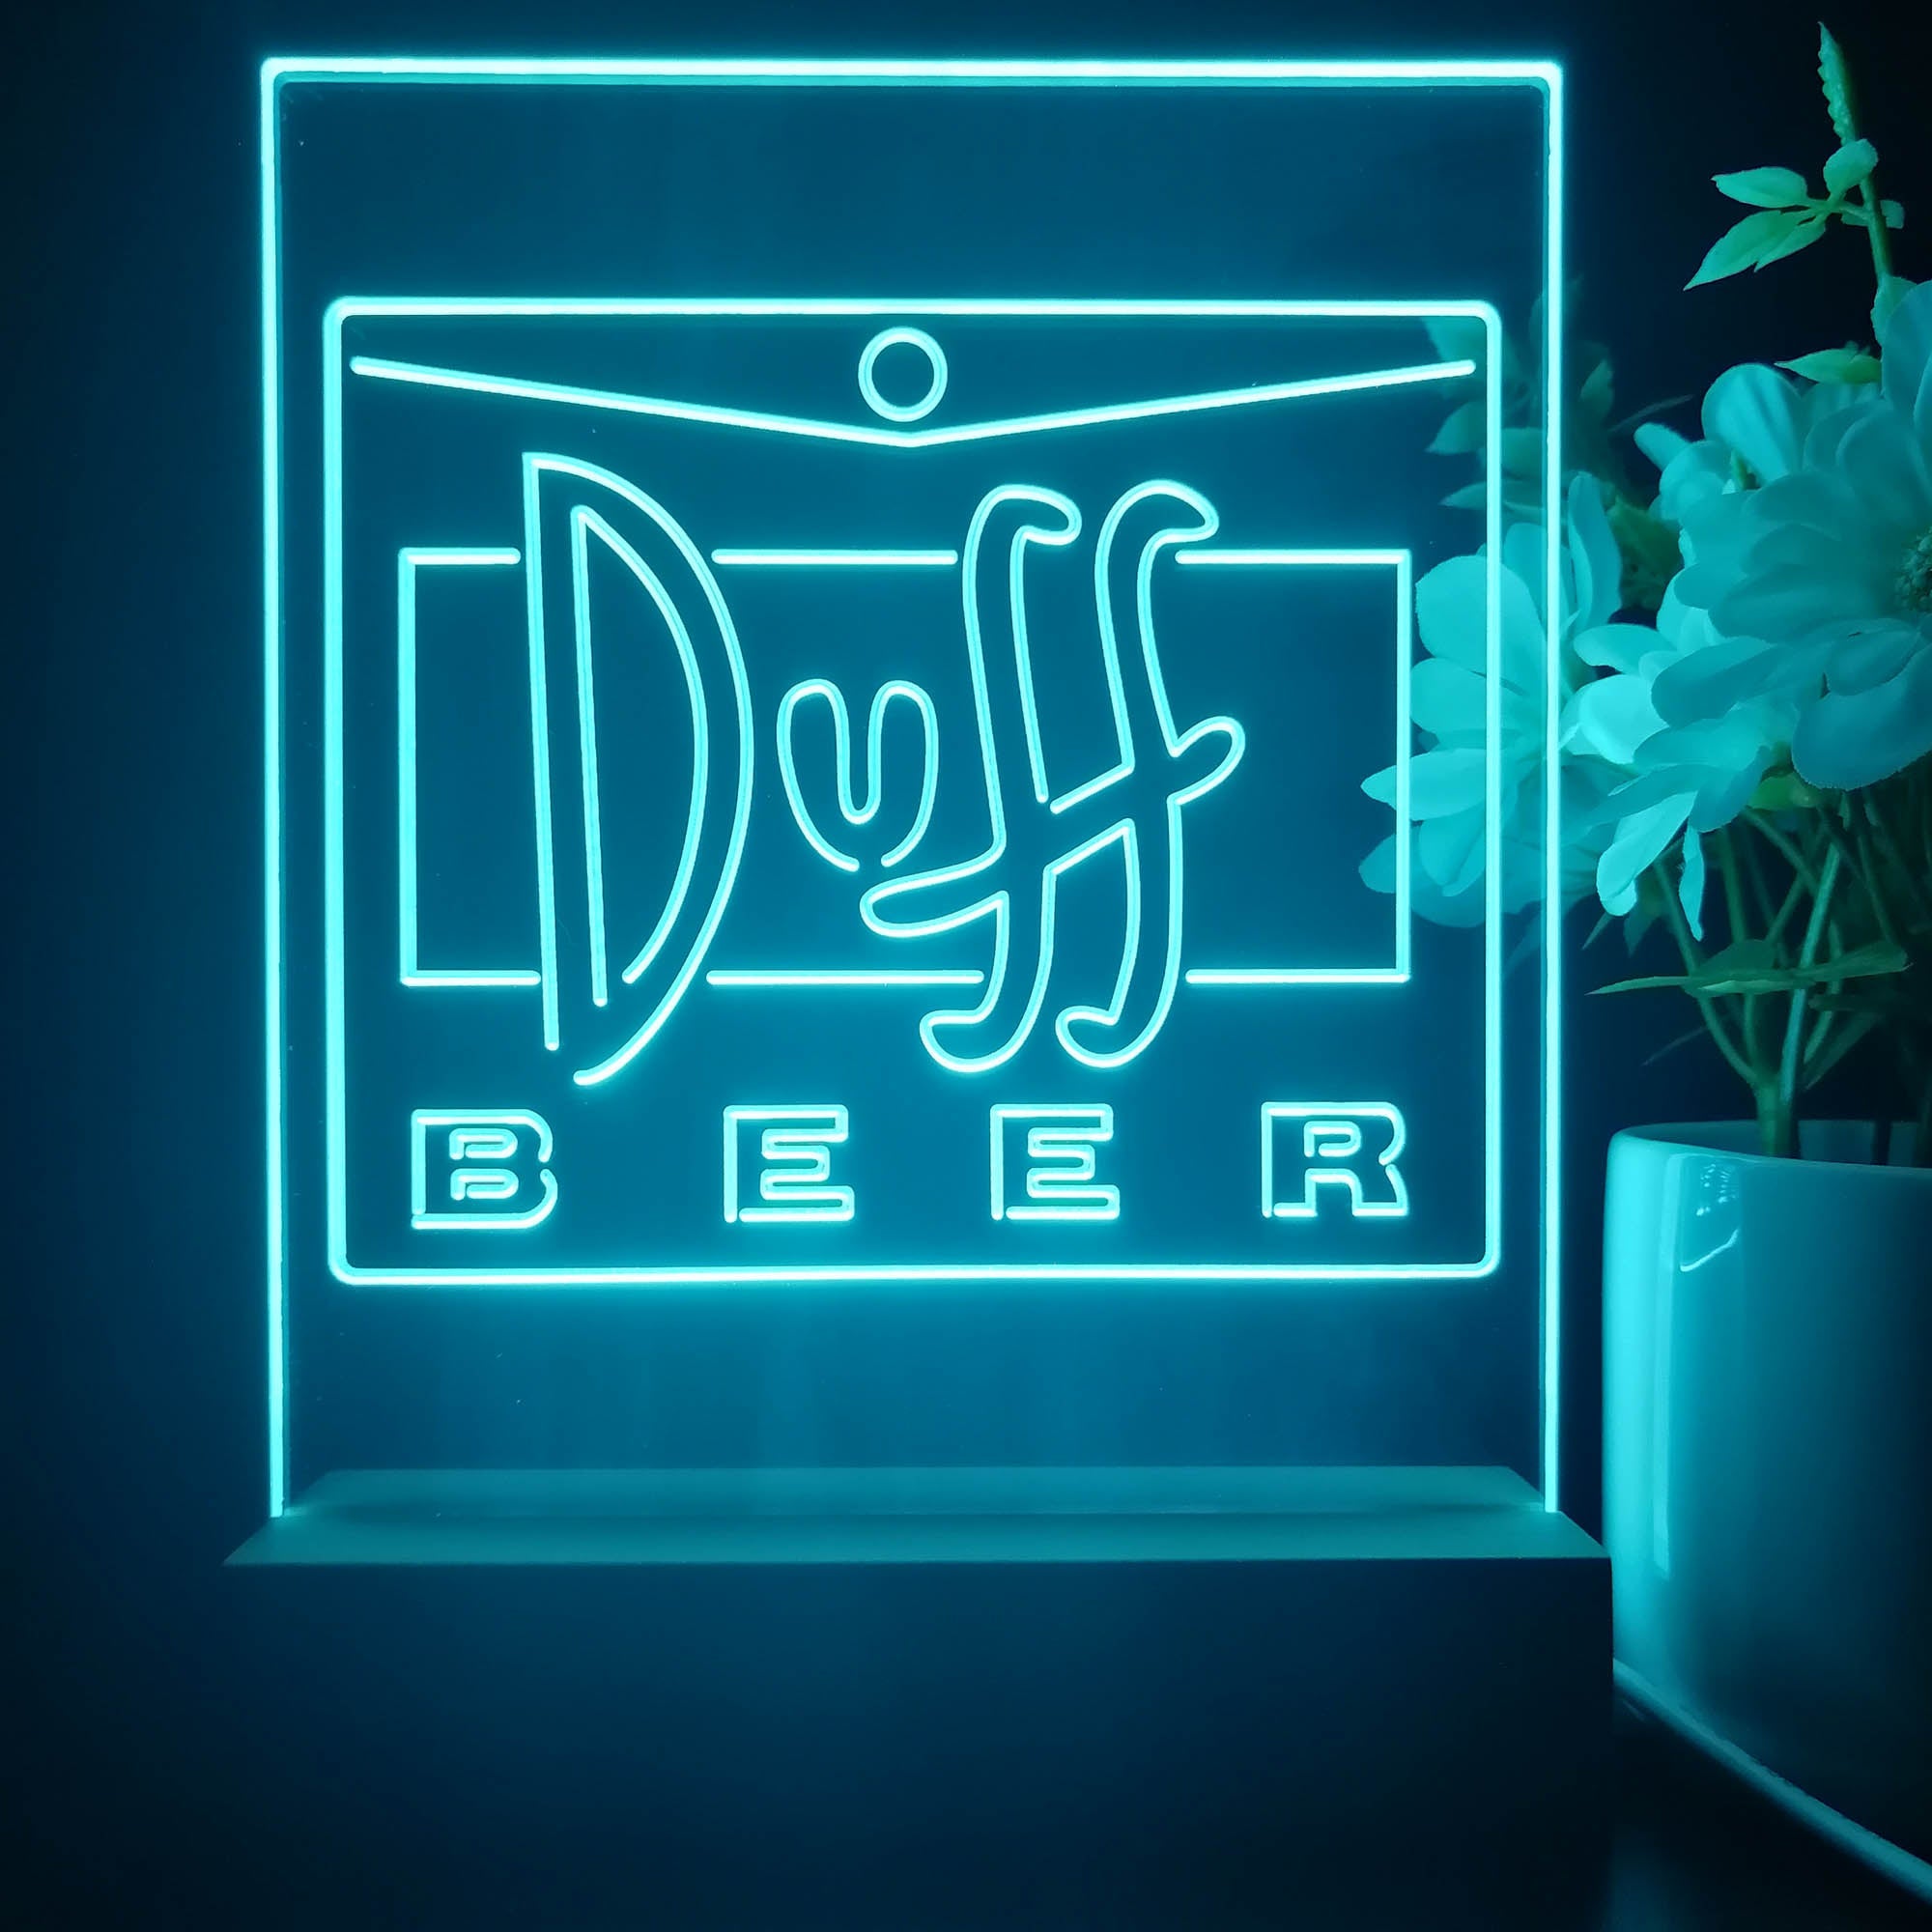 Duff Beer Bar 3D Illusion Night Light Desk Lamp